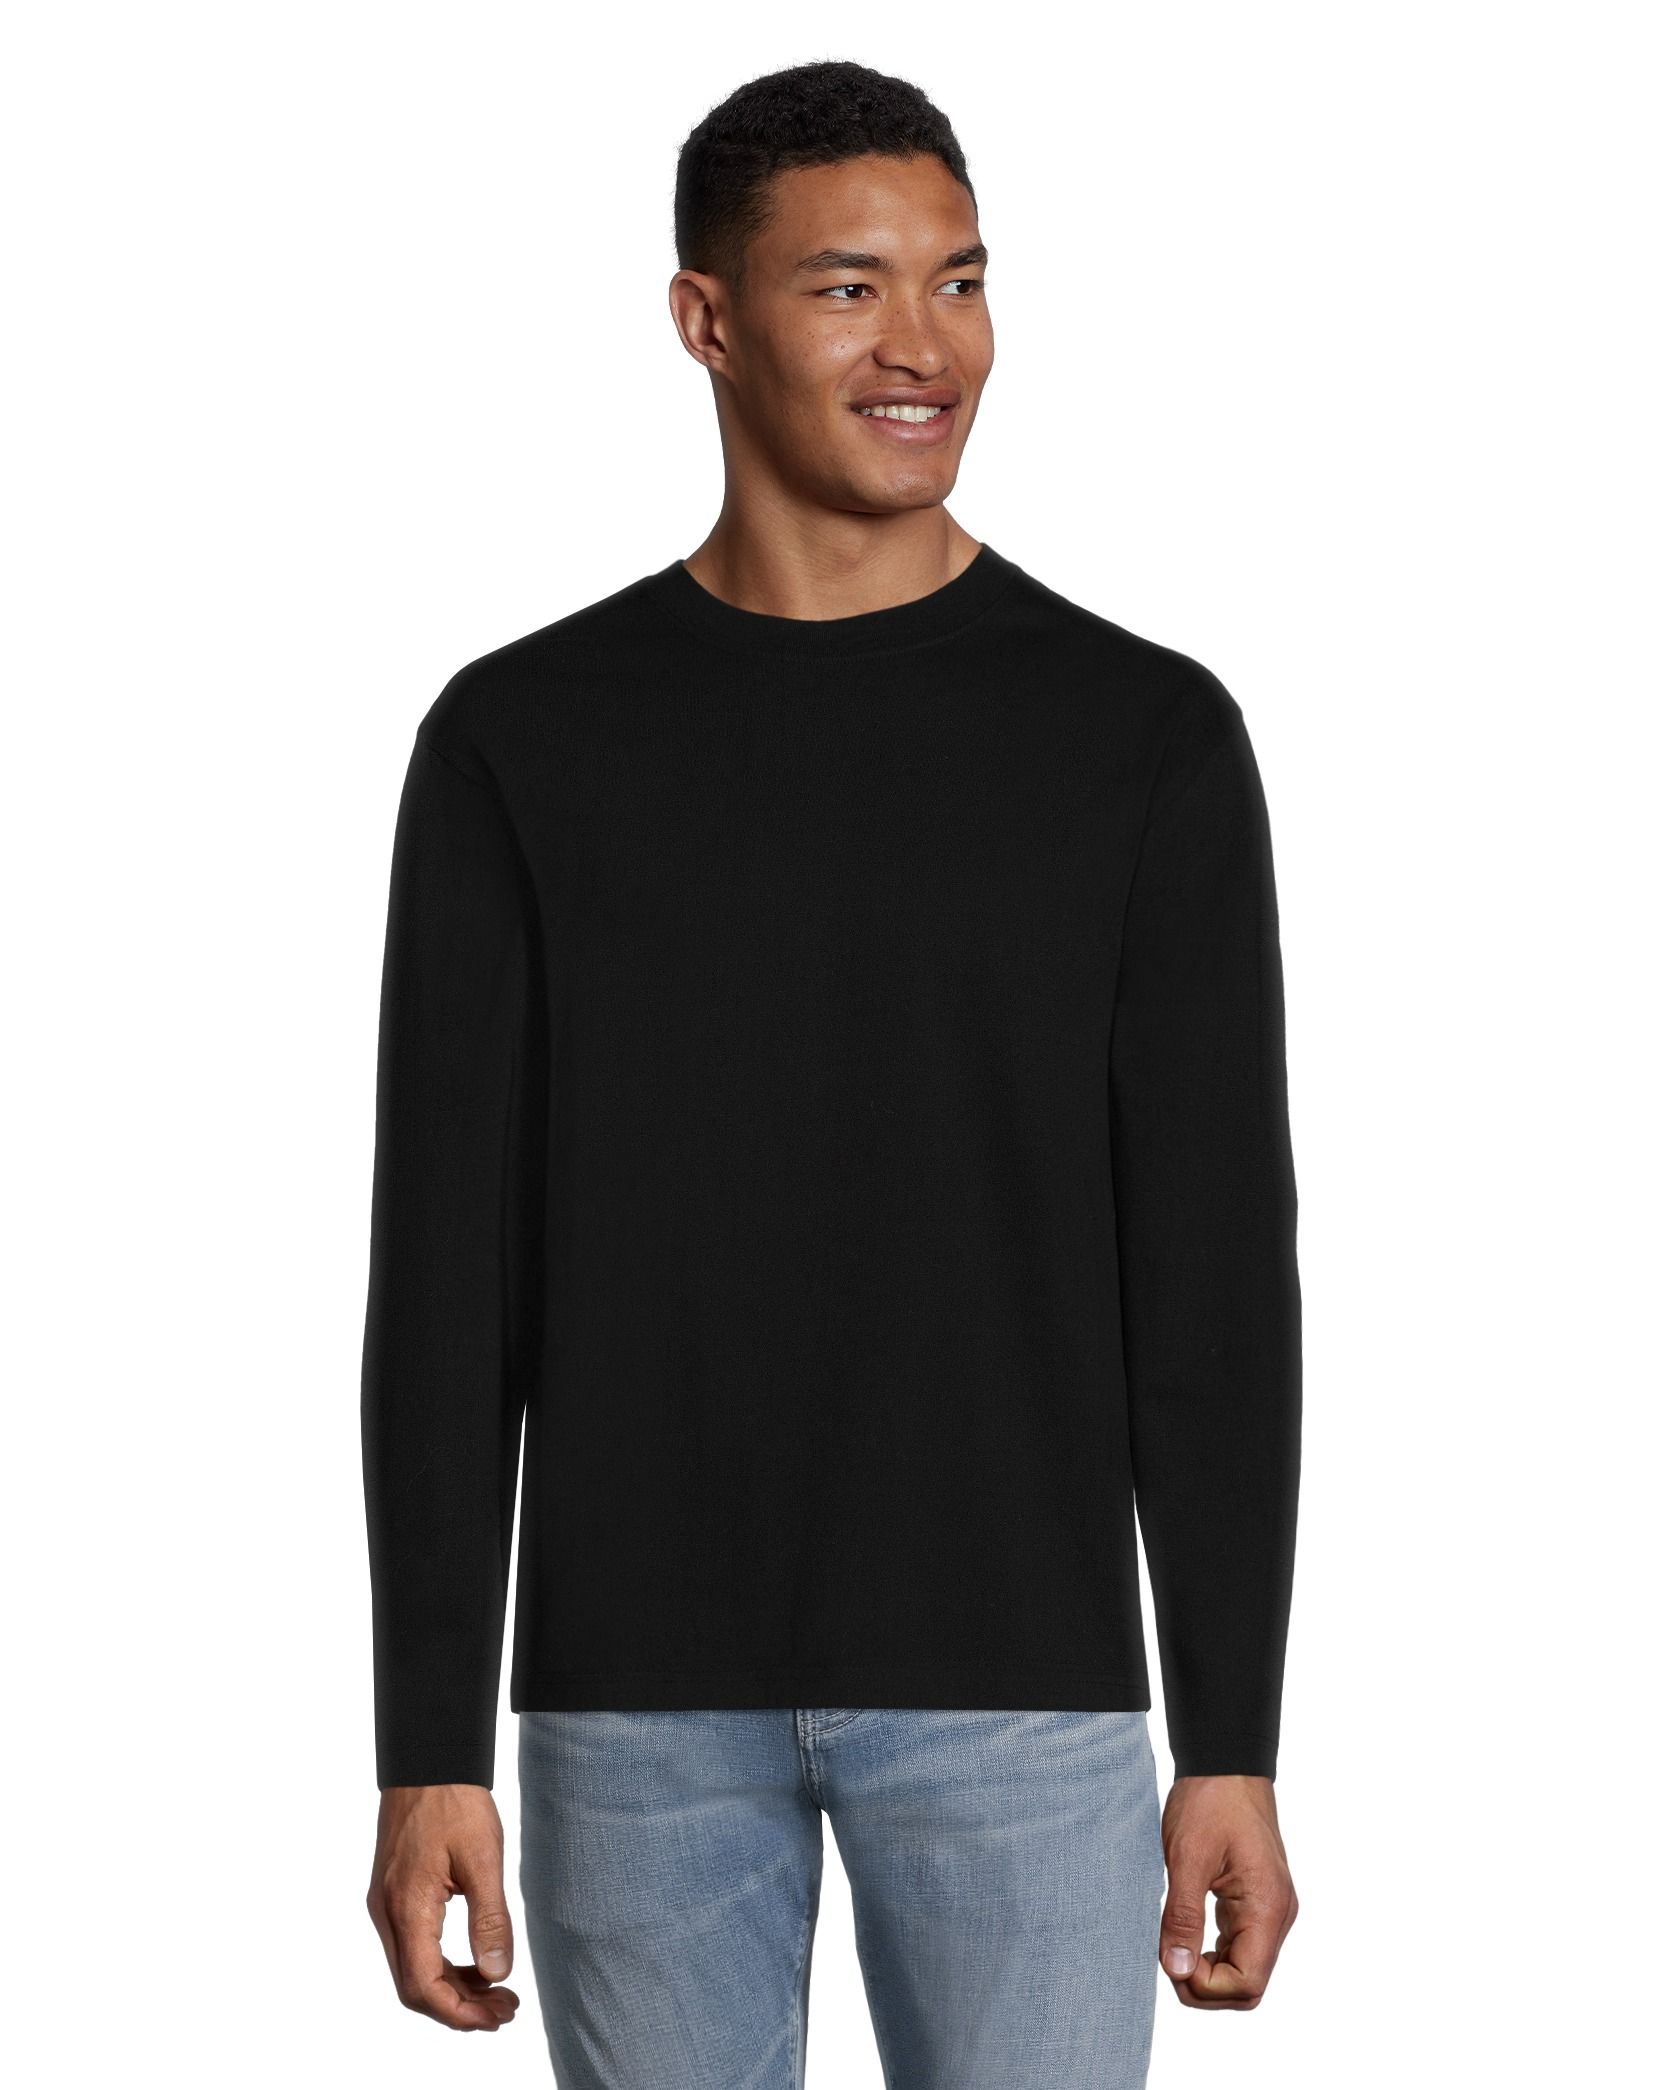 The Classic Black – Cotton Shirt